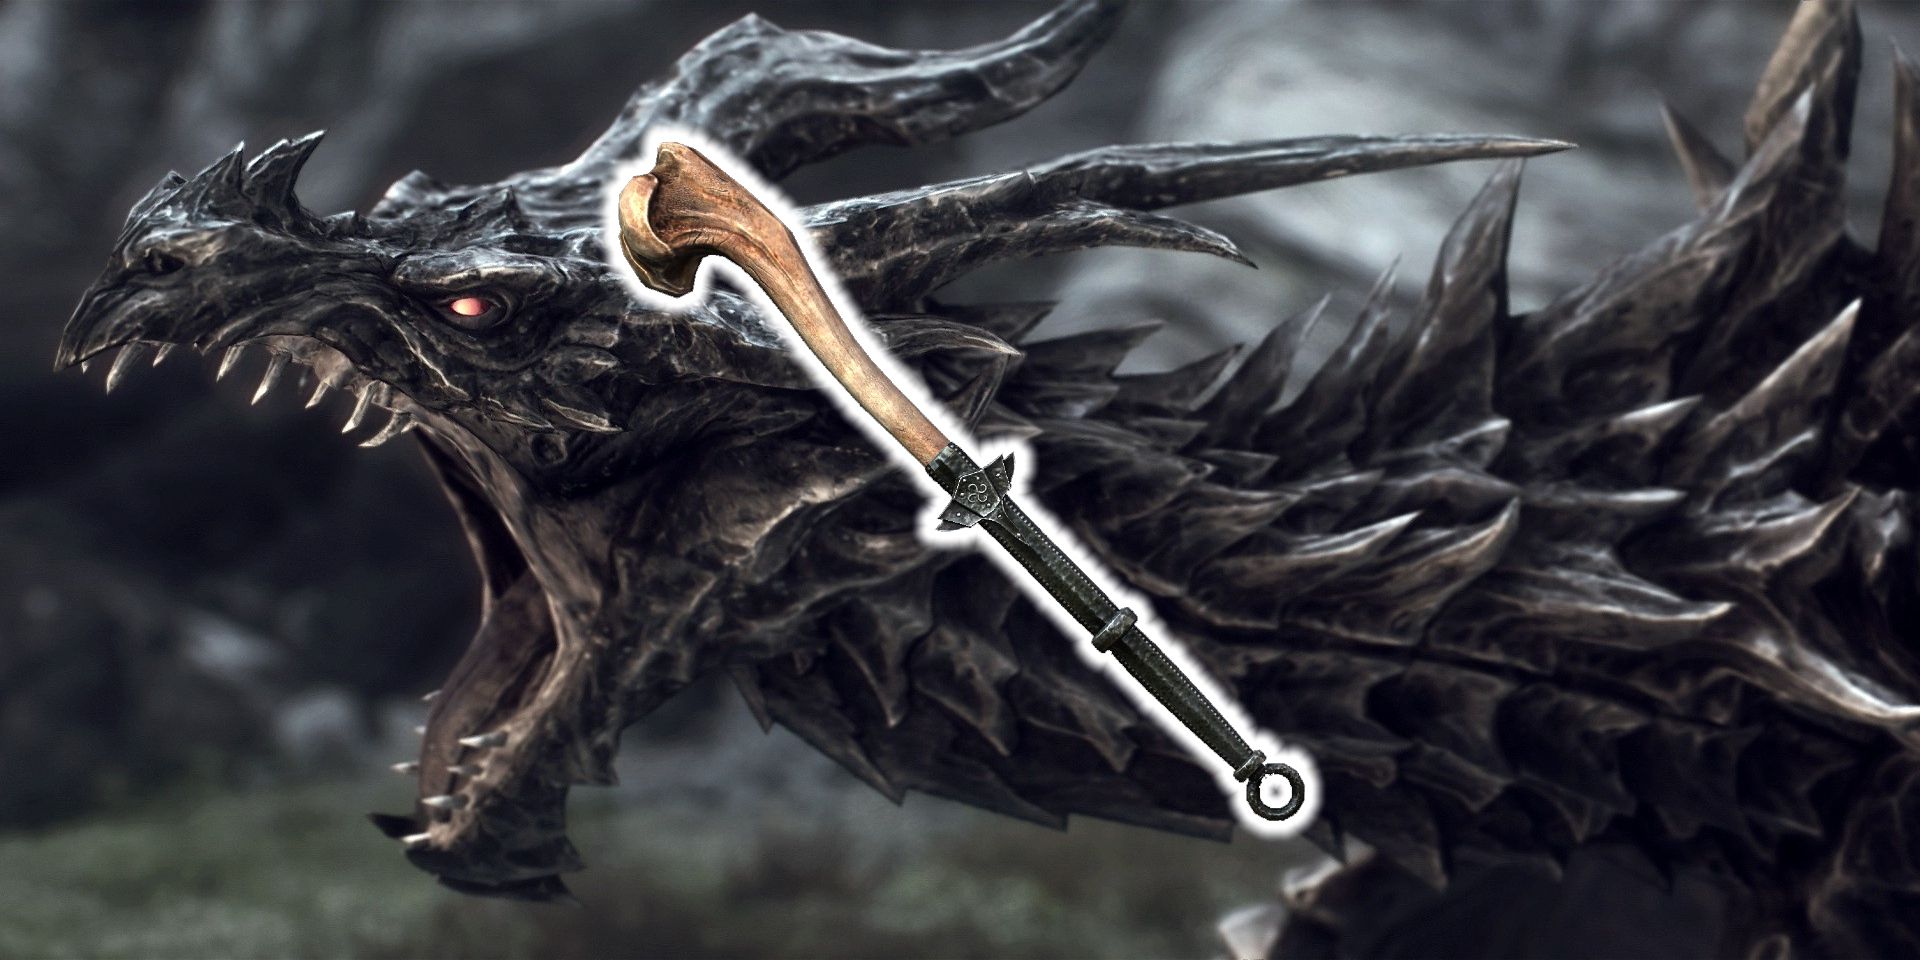 The Dragonbone Warhammer in The Elder Scrolls V: Skyrim.